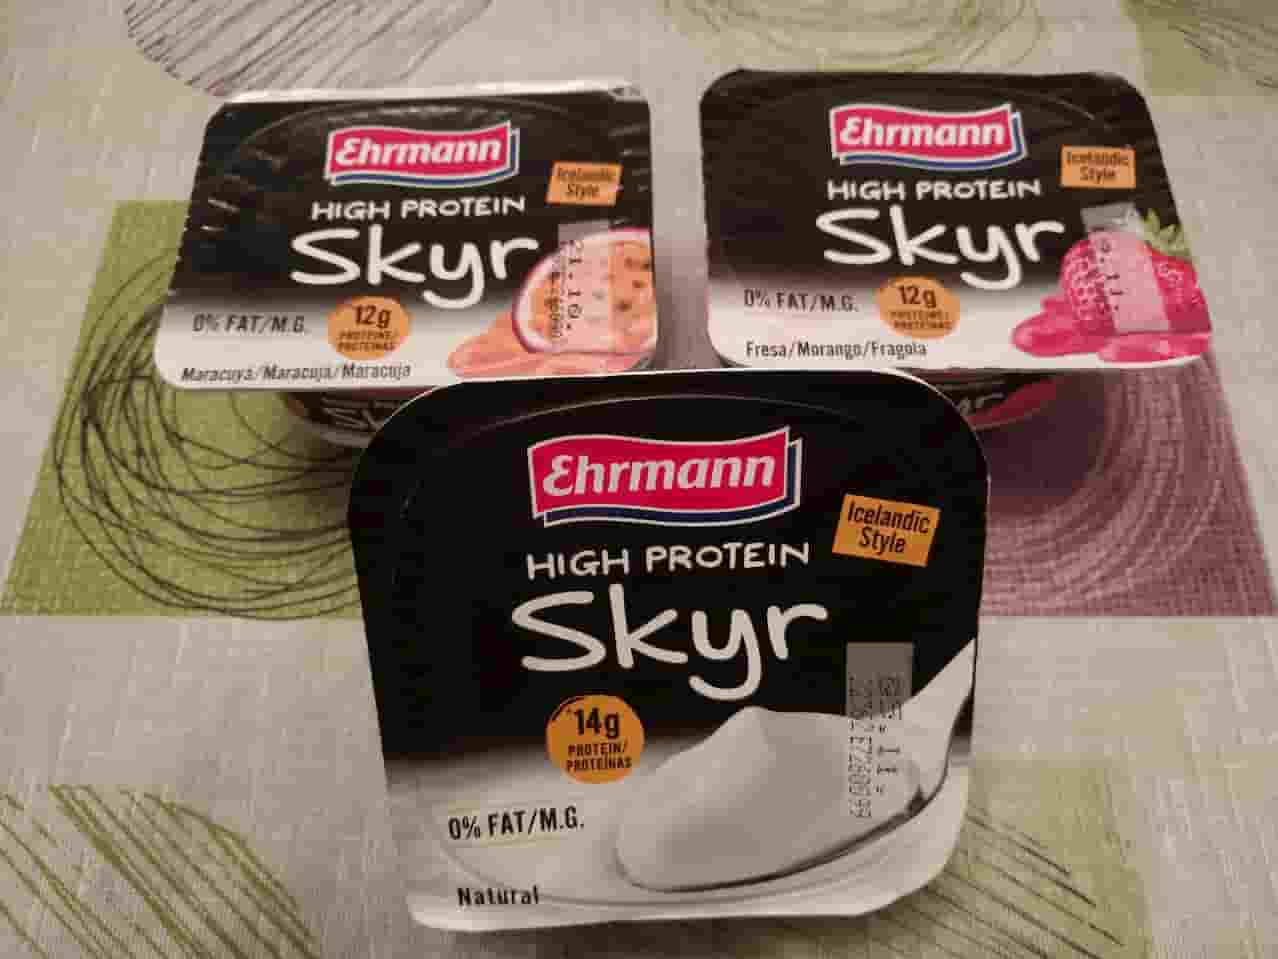 Yogur SKyr del consum.